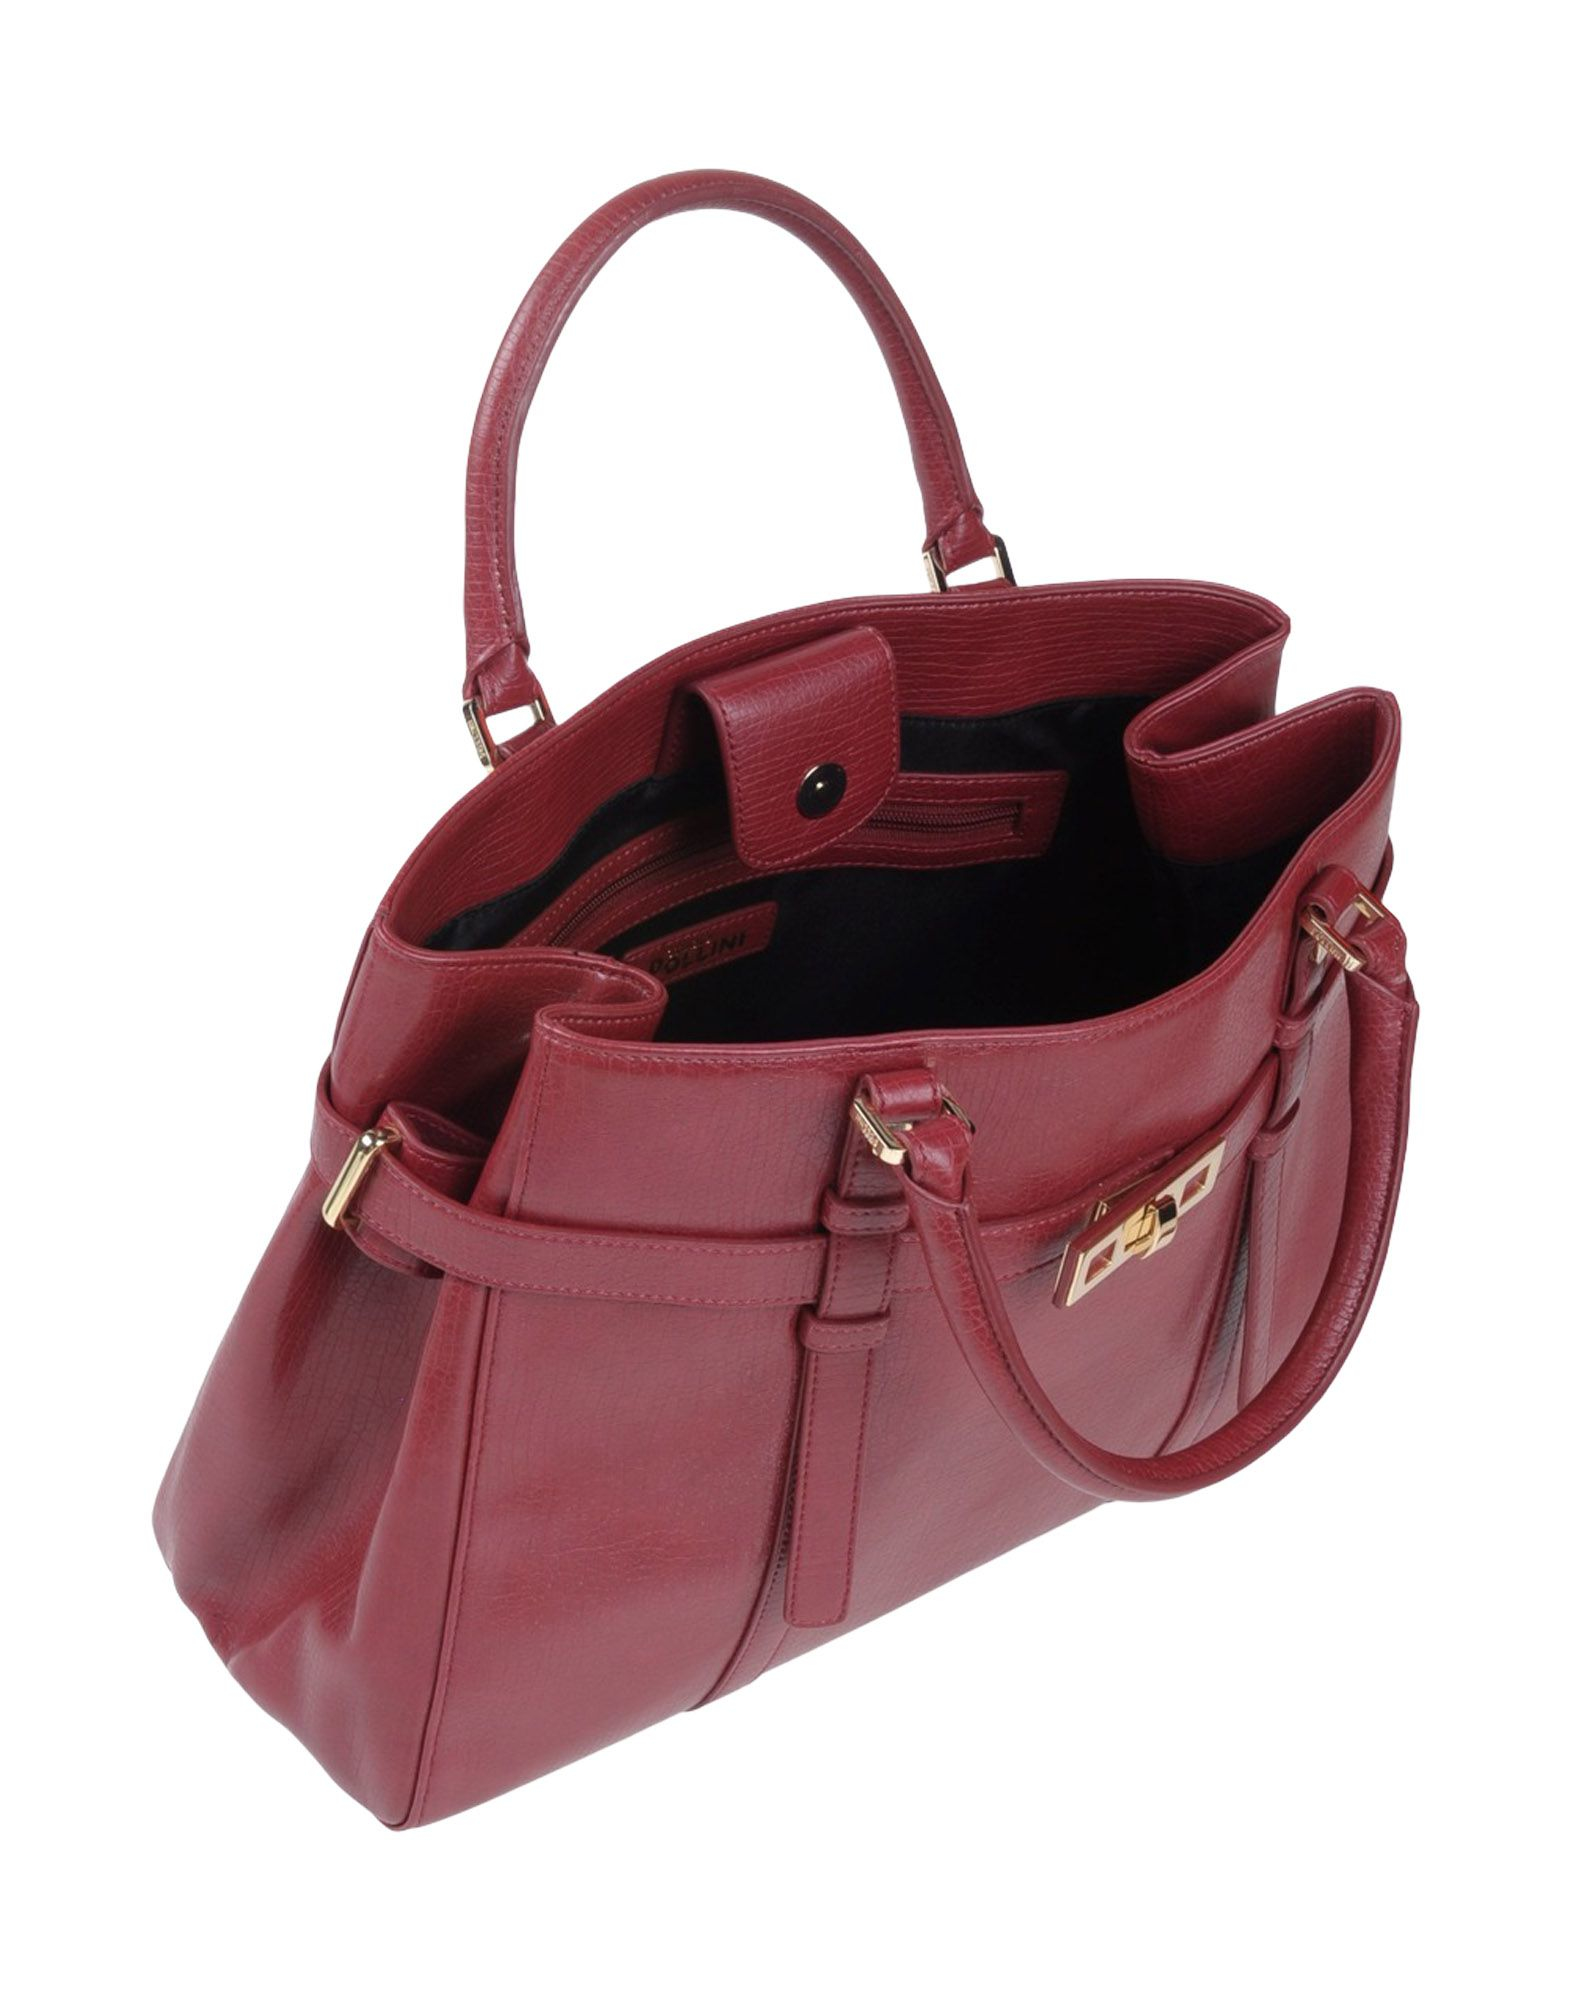 Lyst - Studio pollini Handbag in Purple